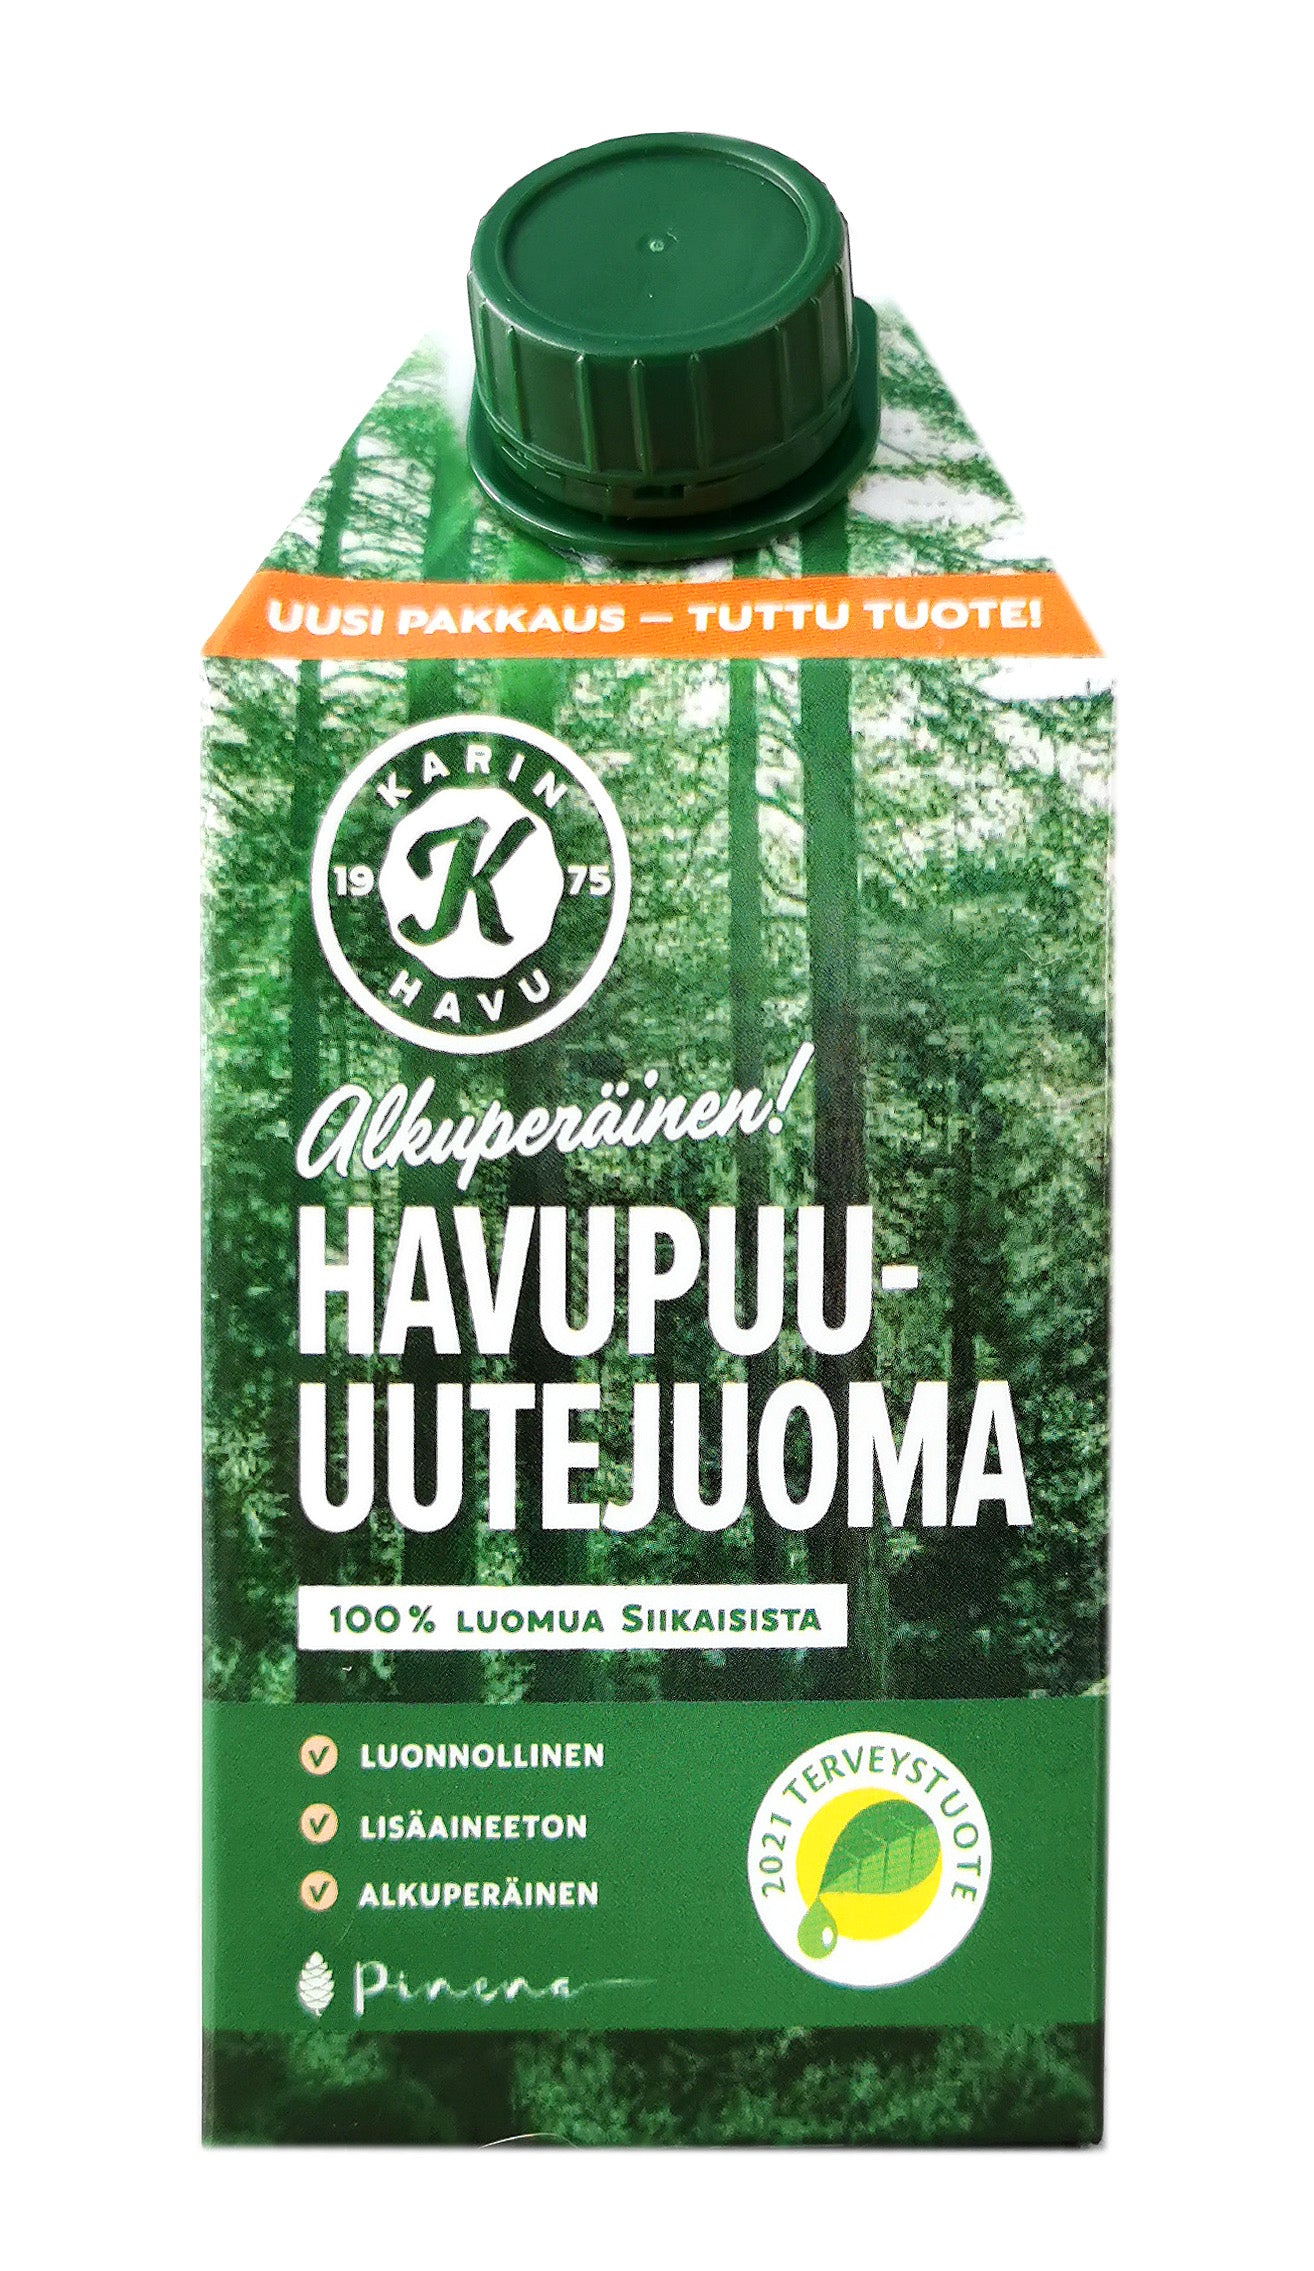 Karin Havupuu-uutejuoma 6-pack-Karin Havupuu-Hyvinvoinnin Tavaratalo